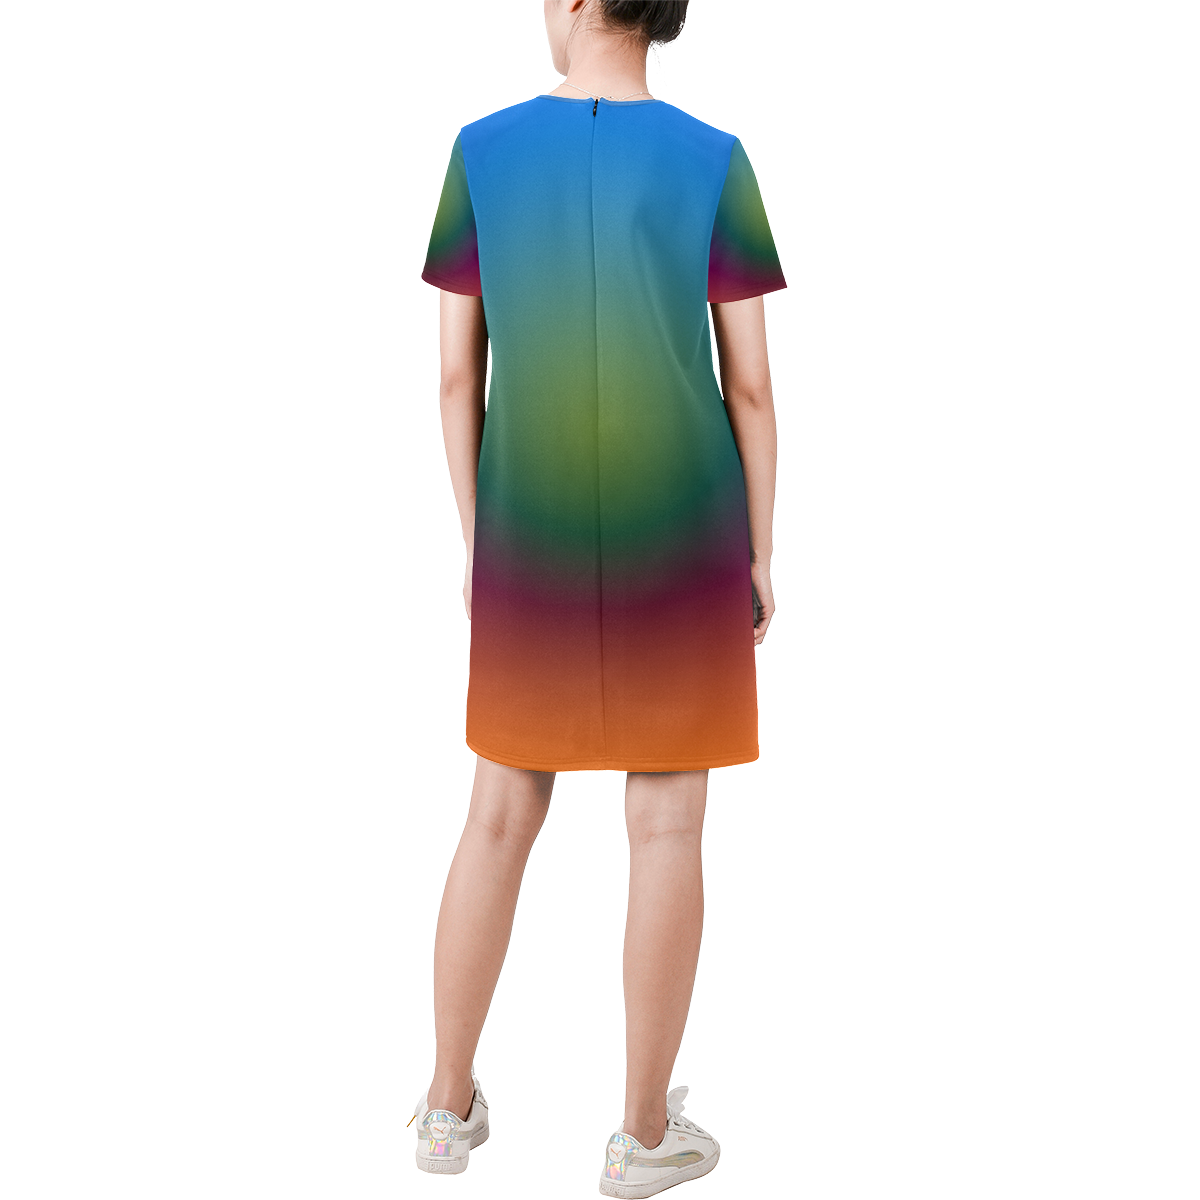 Big Rich Spectrum by Aleta Short-Sleeve Round Neck A-Line Dress (Model D47)